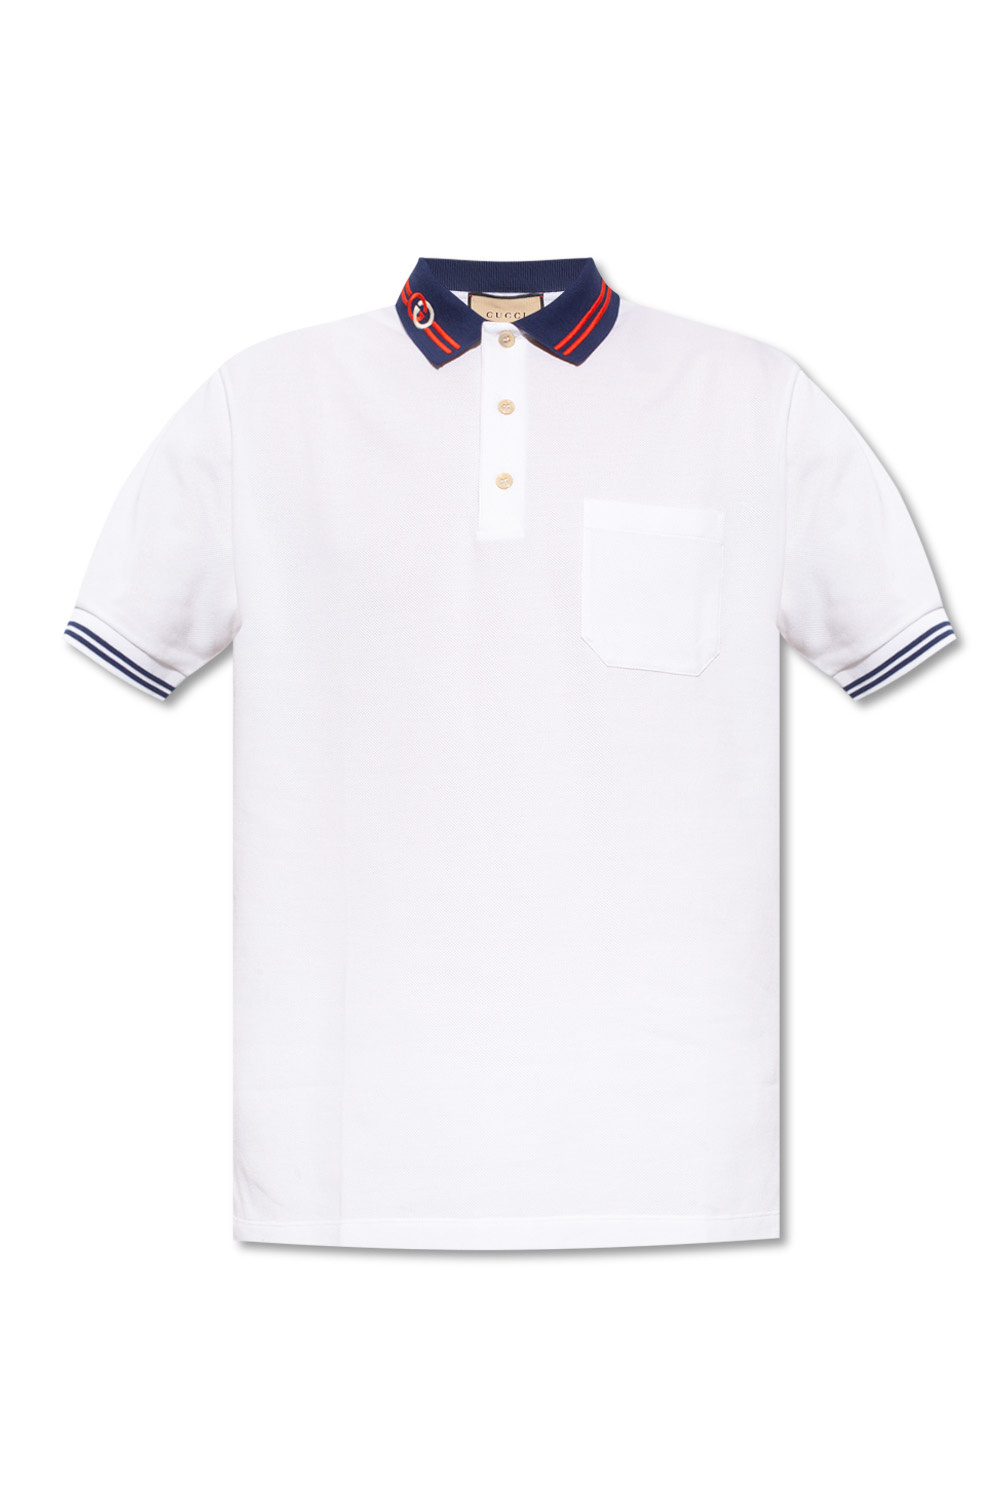 Gucci Polo shirt with logo | Men's Clothing | Vitkac